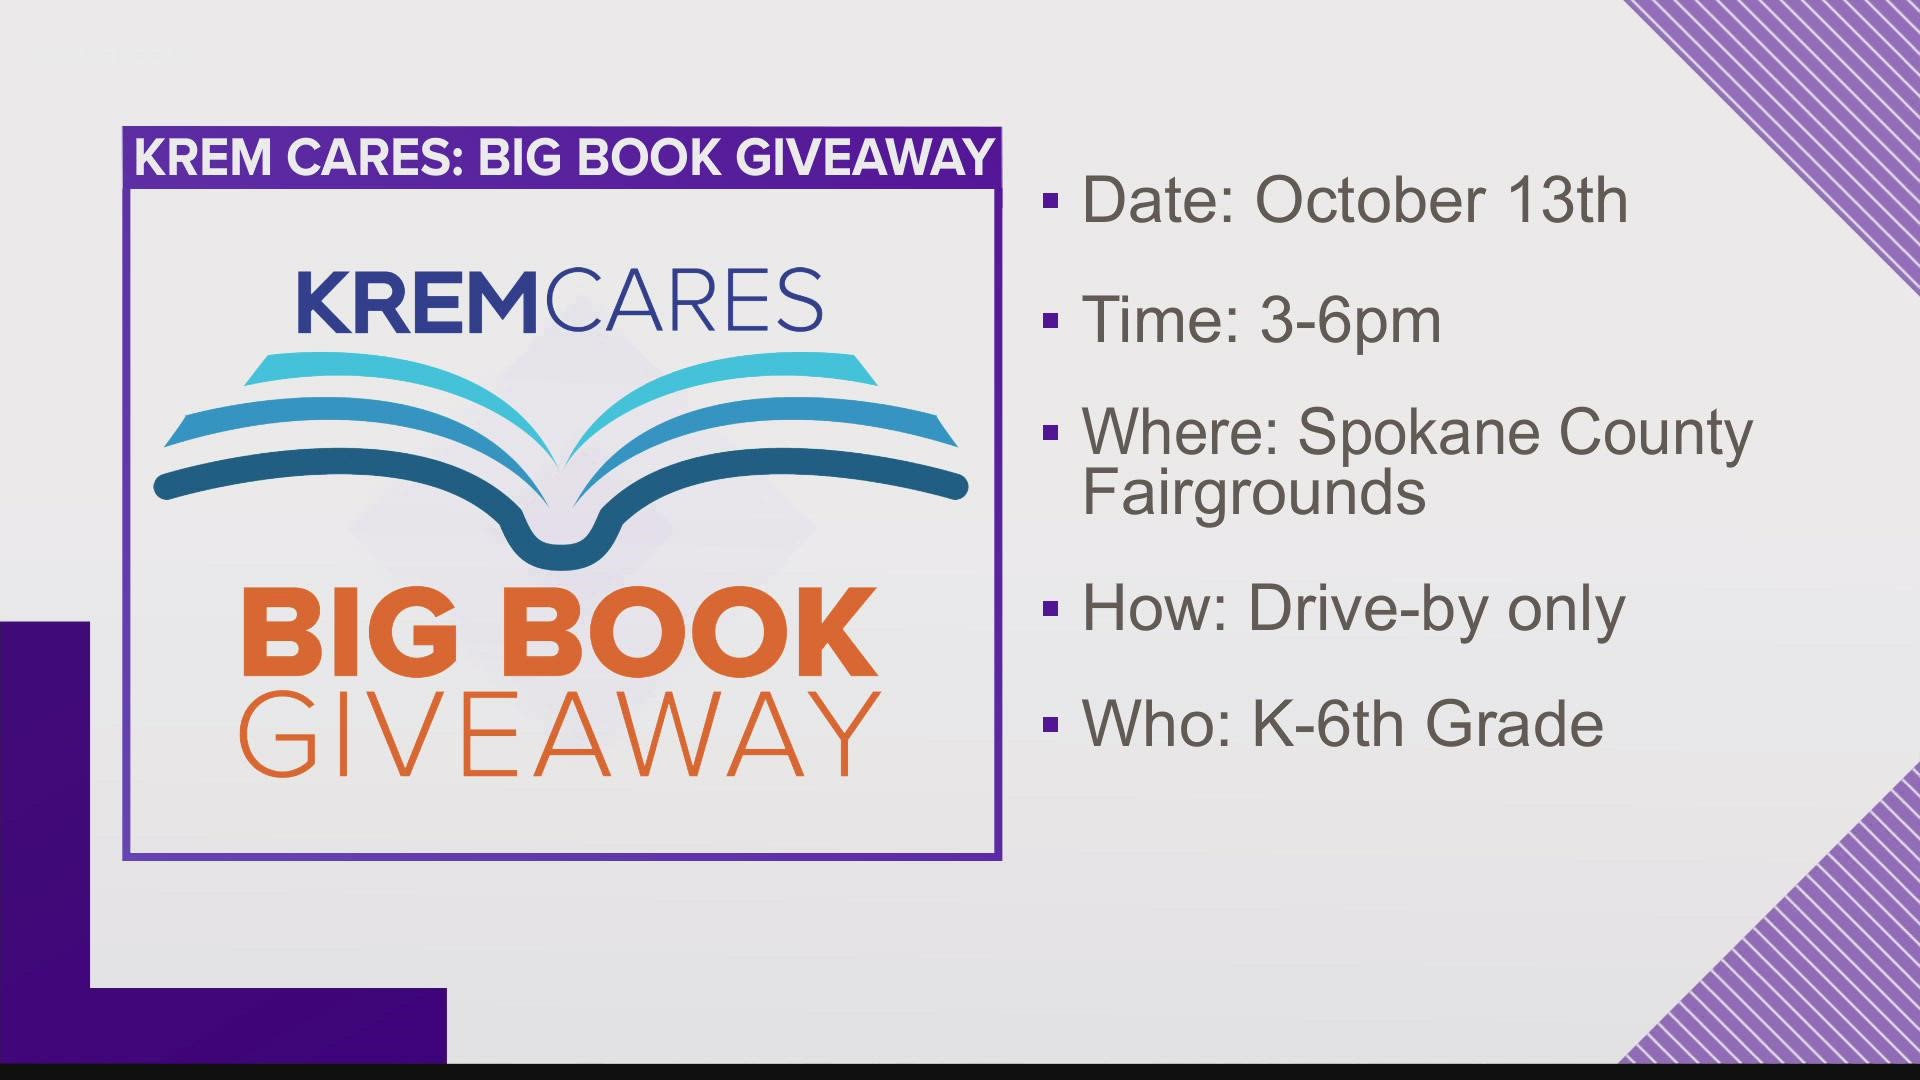 KREM 2's Mark Hanrahan and Whitney Ward were at the Spokane County Fairgrounds for KREM Cares Big Book Giveaway.